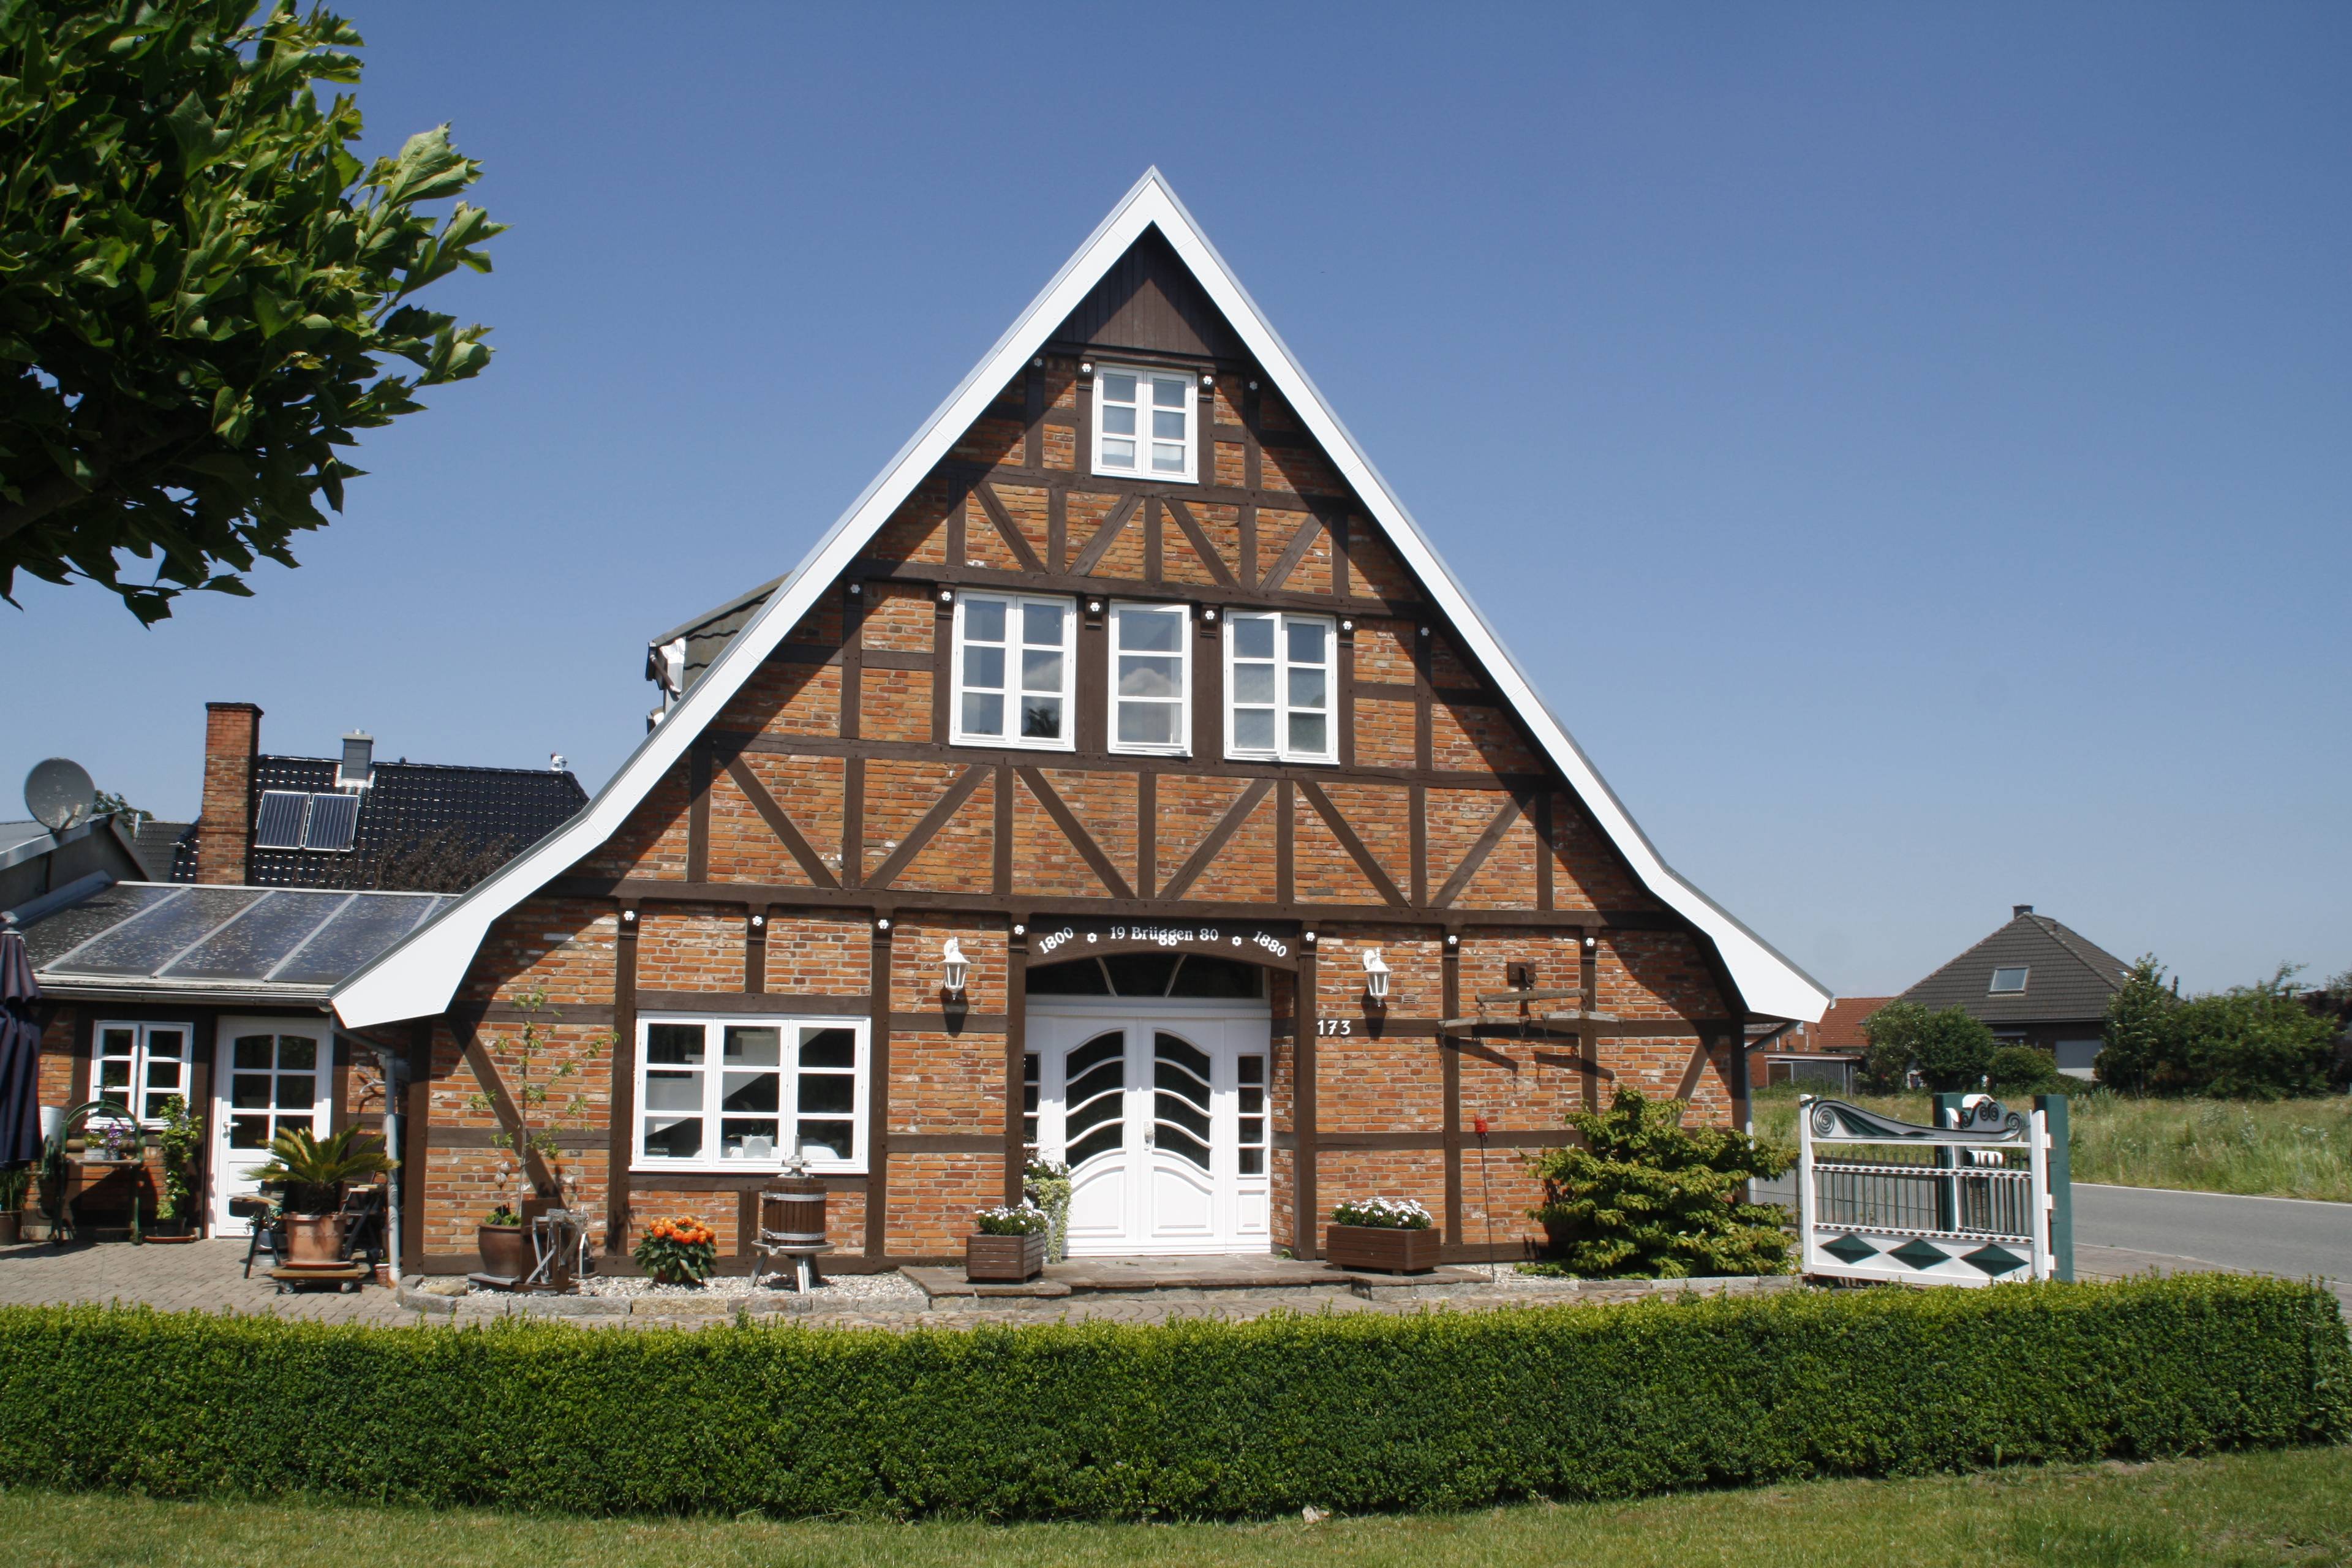 Gemeinde Bönebüttel